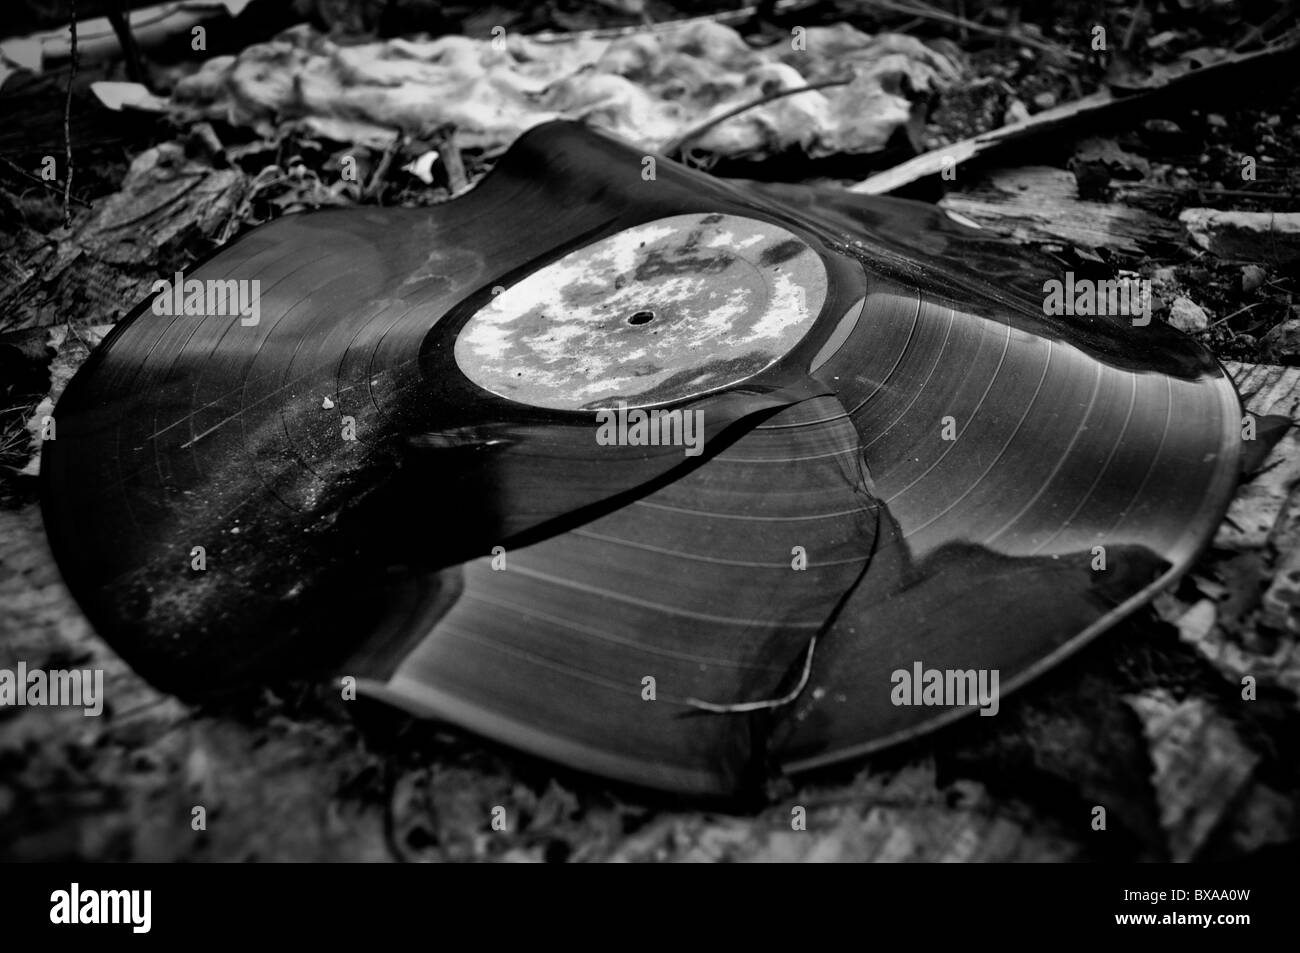 worn-out-vinyl-record-BXAA0W.jpg